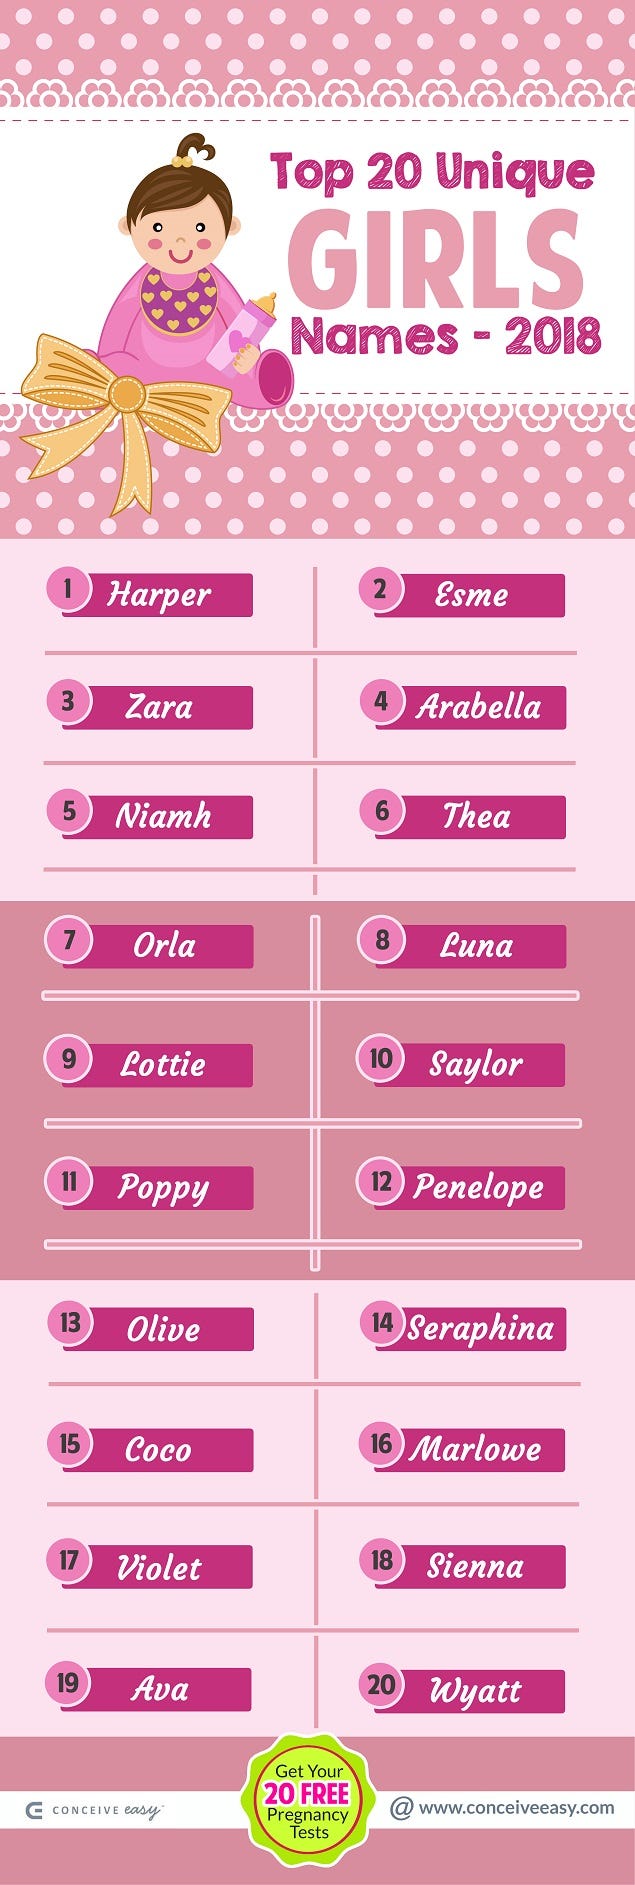 Top 20 Unique Girls Names Infographic - Conceive Easy - Medium